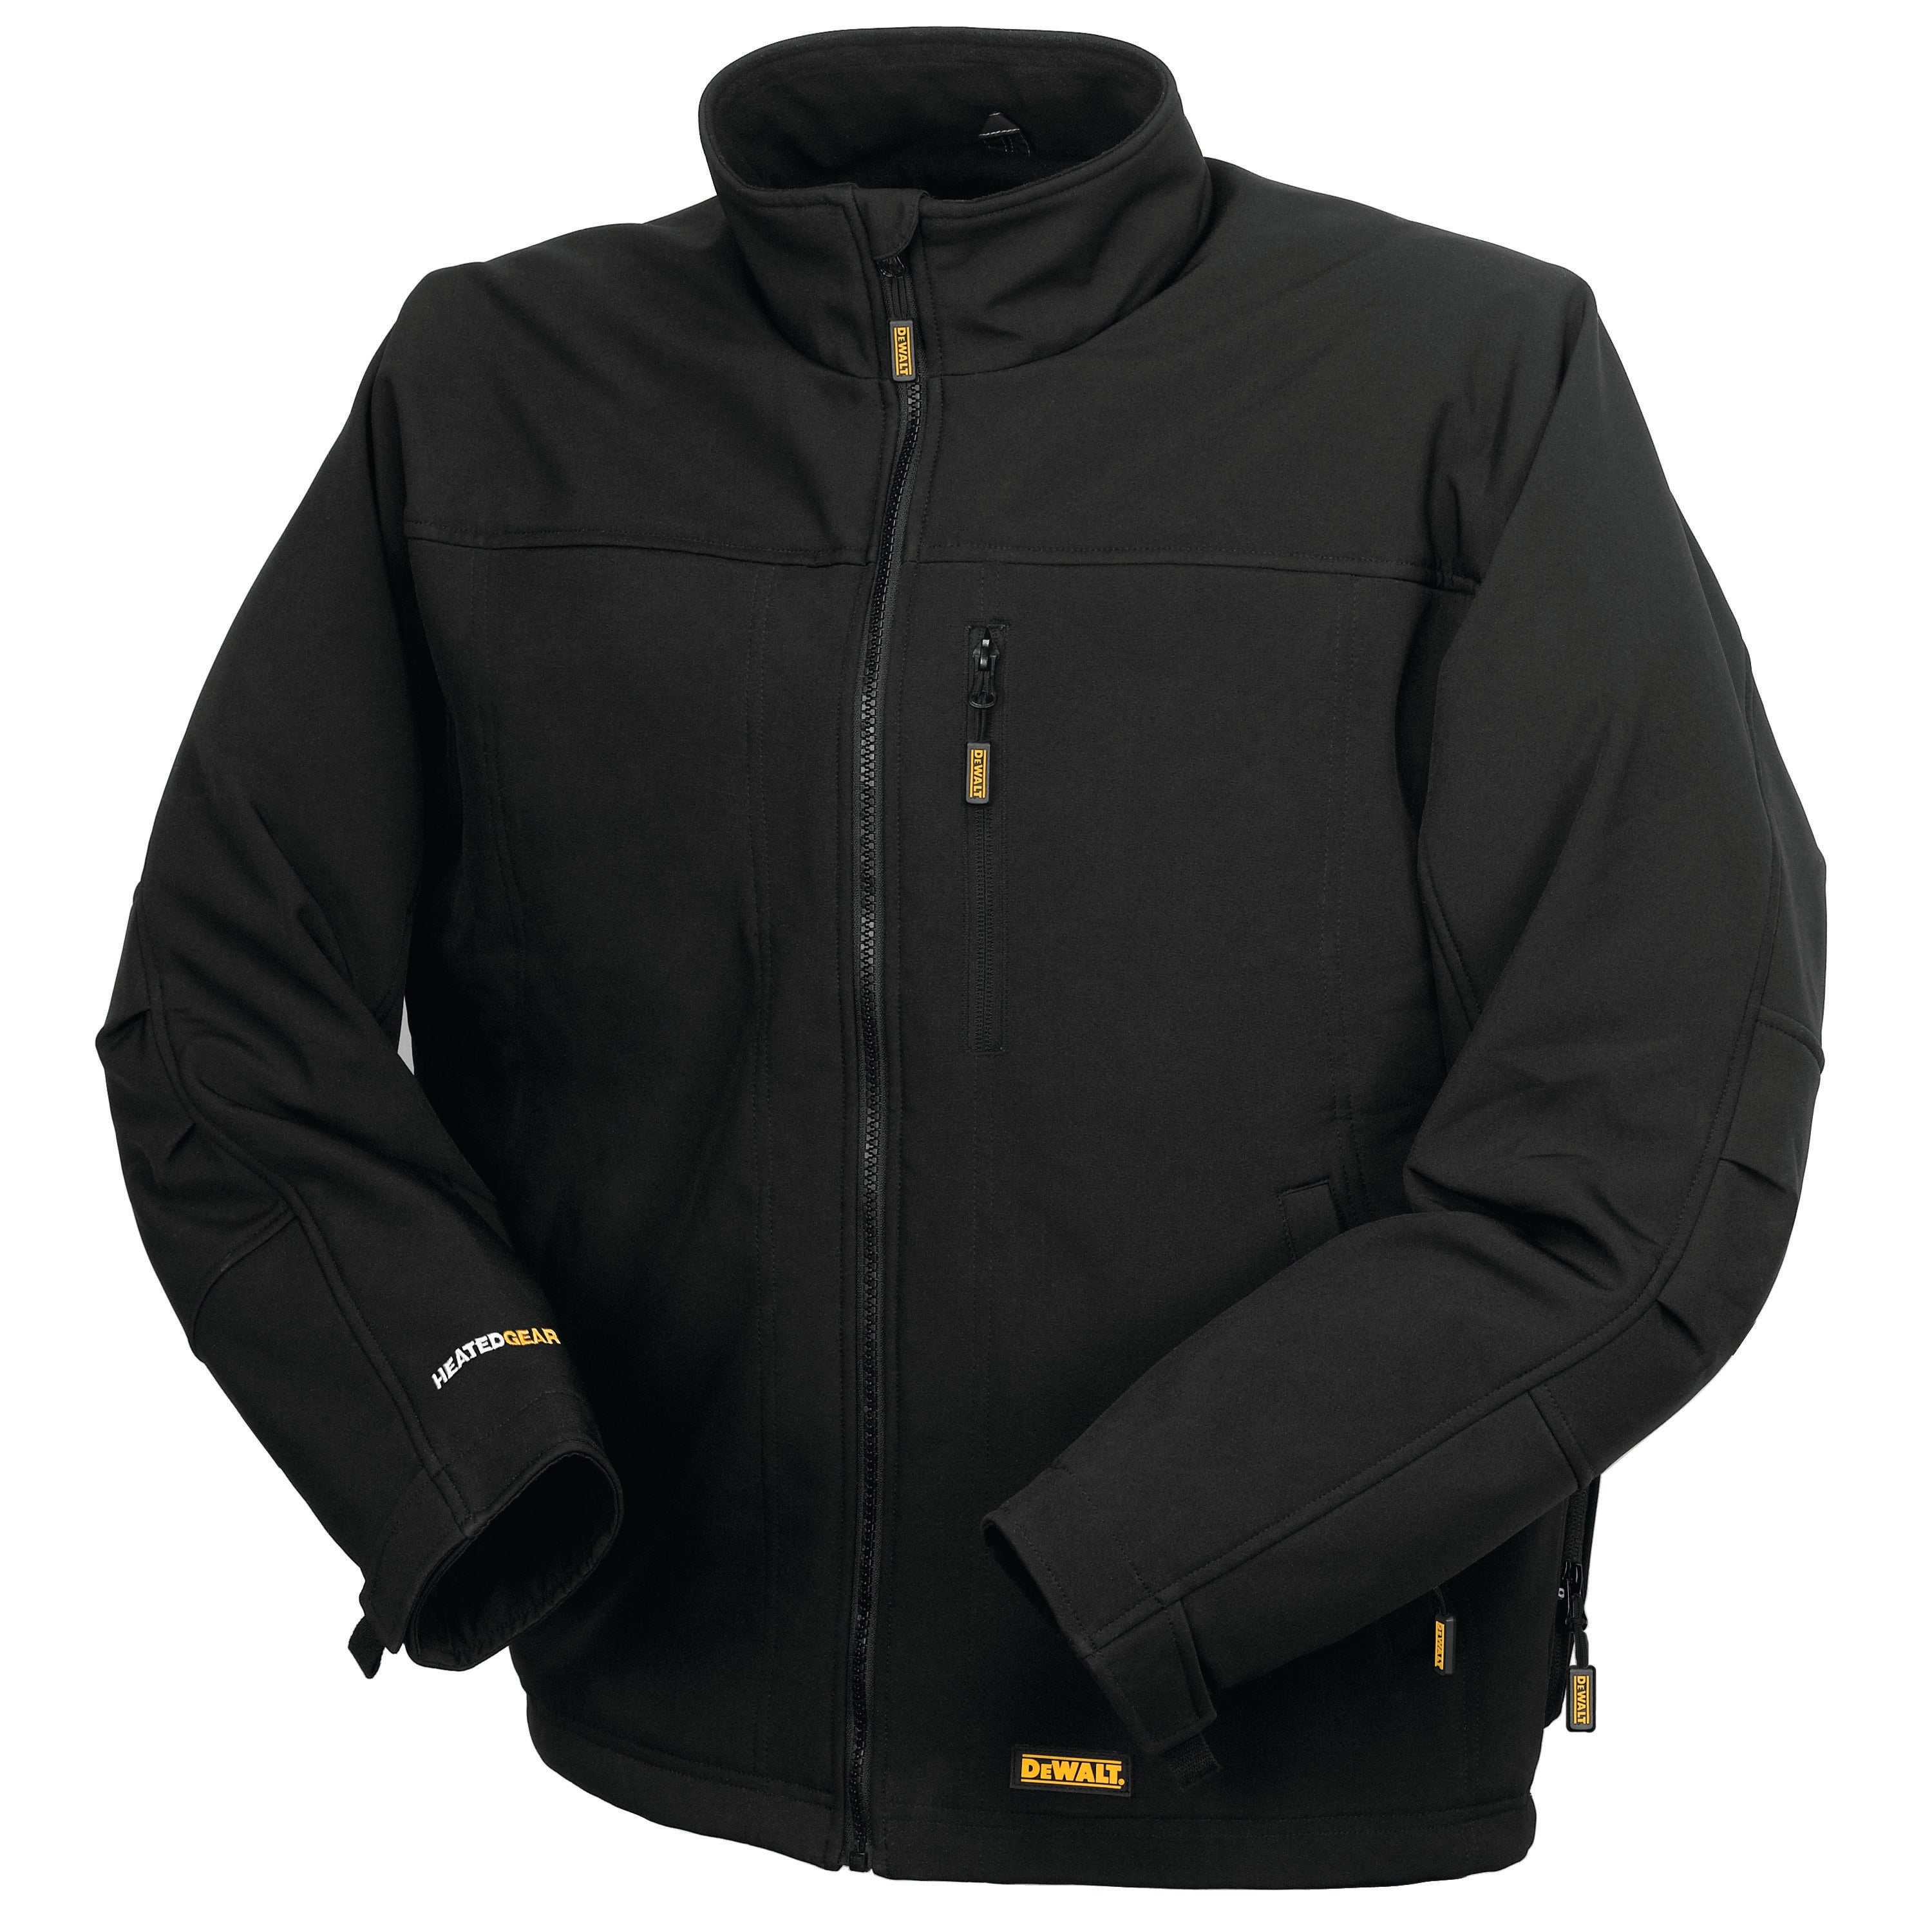 DEWALT Men's Heated Soft Shell Jacket without Battery